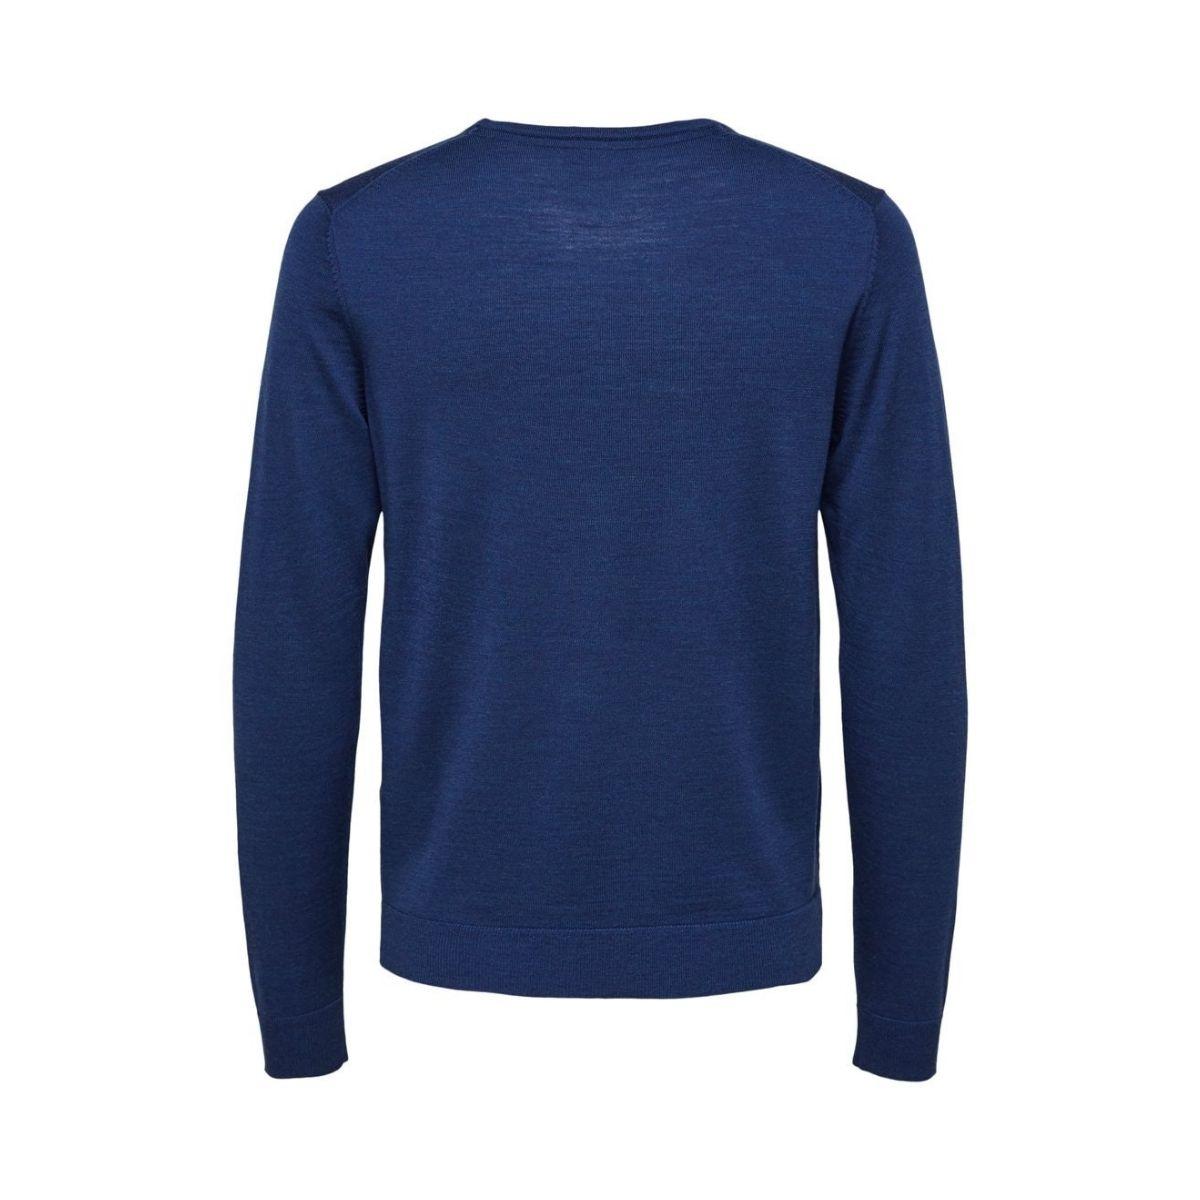 SELECTED Merino Wool in Blue/Blue (Blue) for Men - Lyst